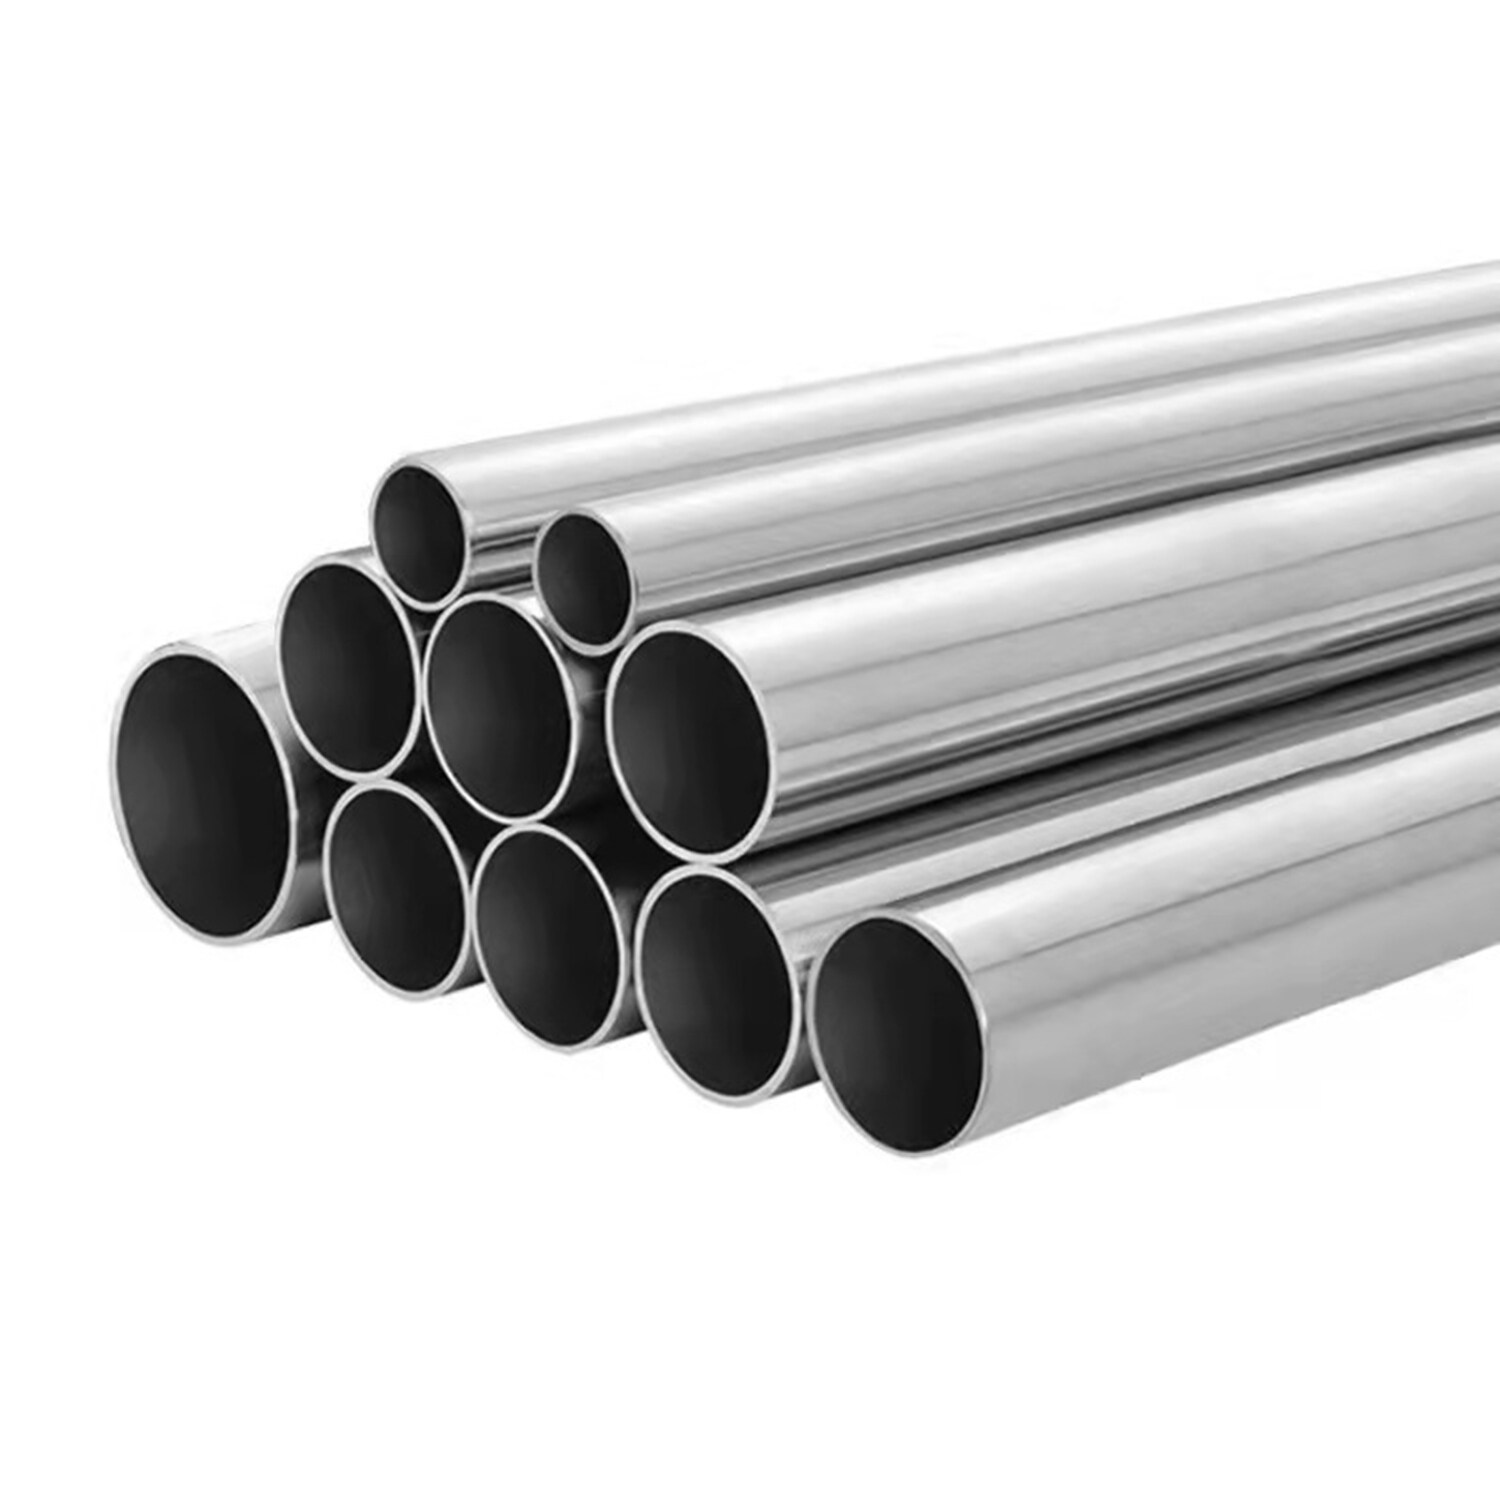 welded stainless steel tubes, welded stainless tube